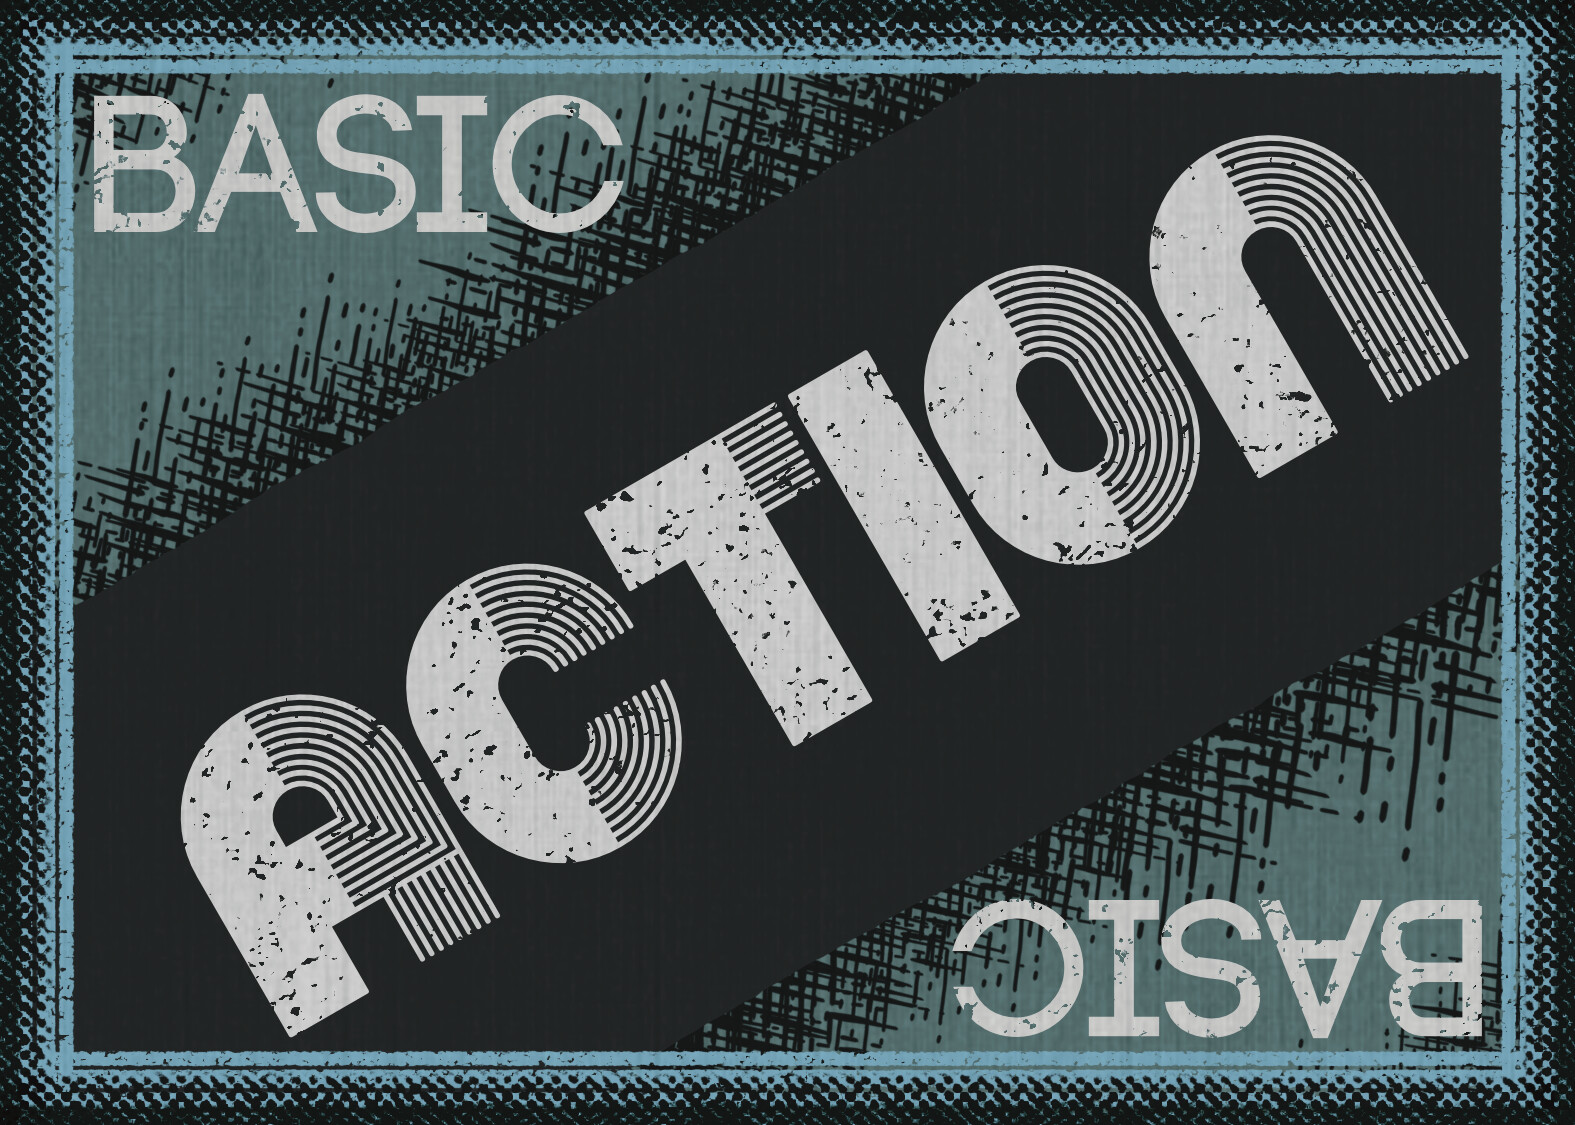 cardback for BASIC ACTION cards